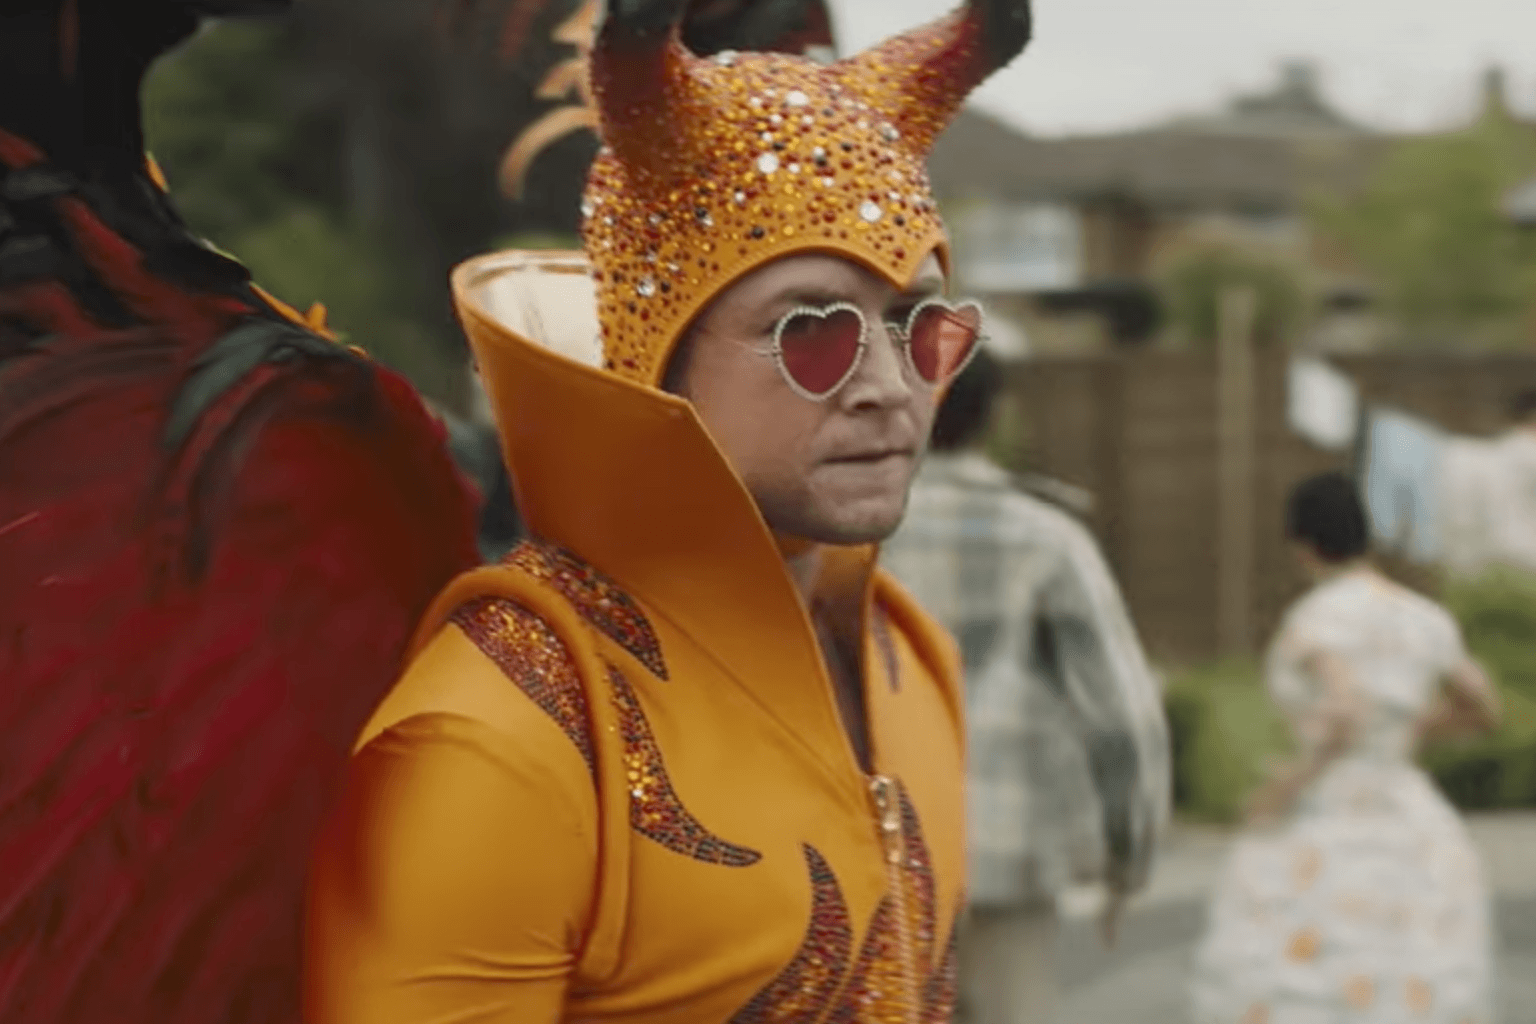 Rocketman trailer: Taron Egerton stars in first trailer for Elton